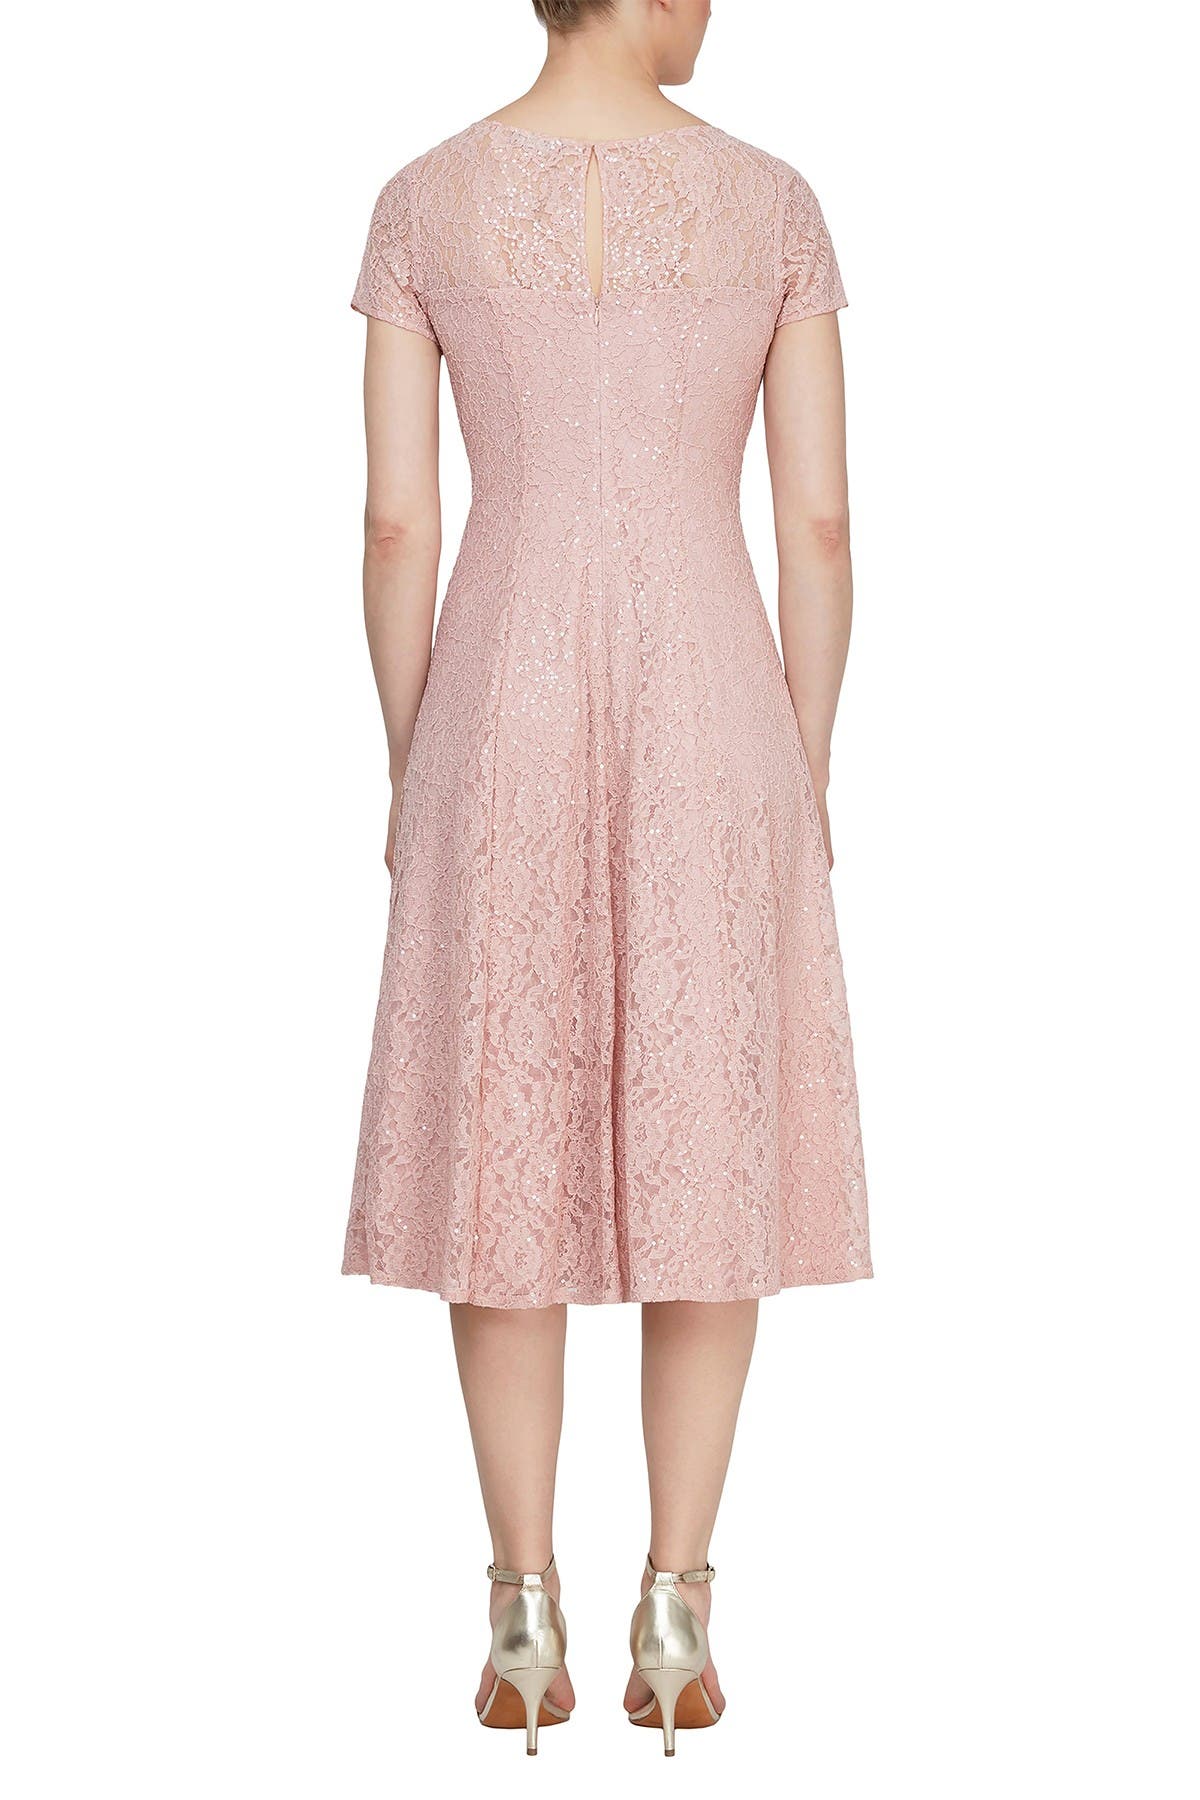 Sl Fashions Tea Length Sequin Lace Dress In Open Orange55